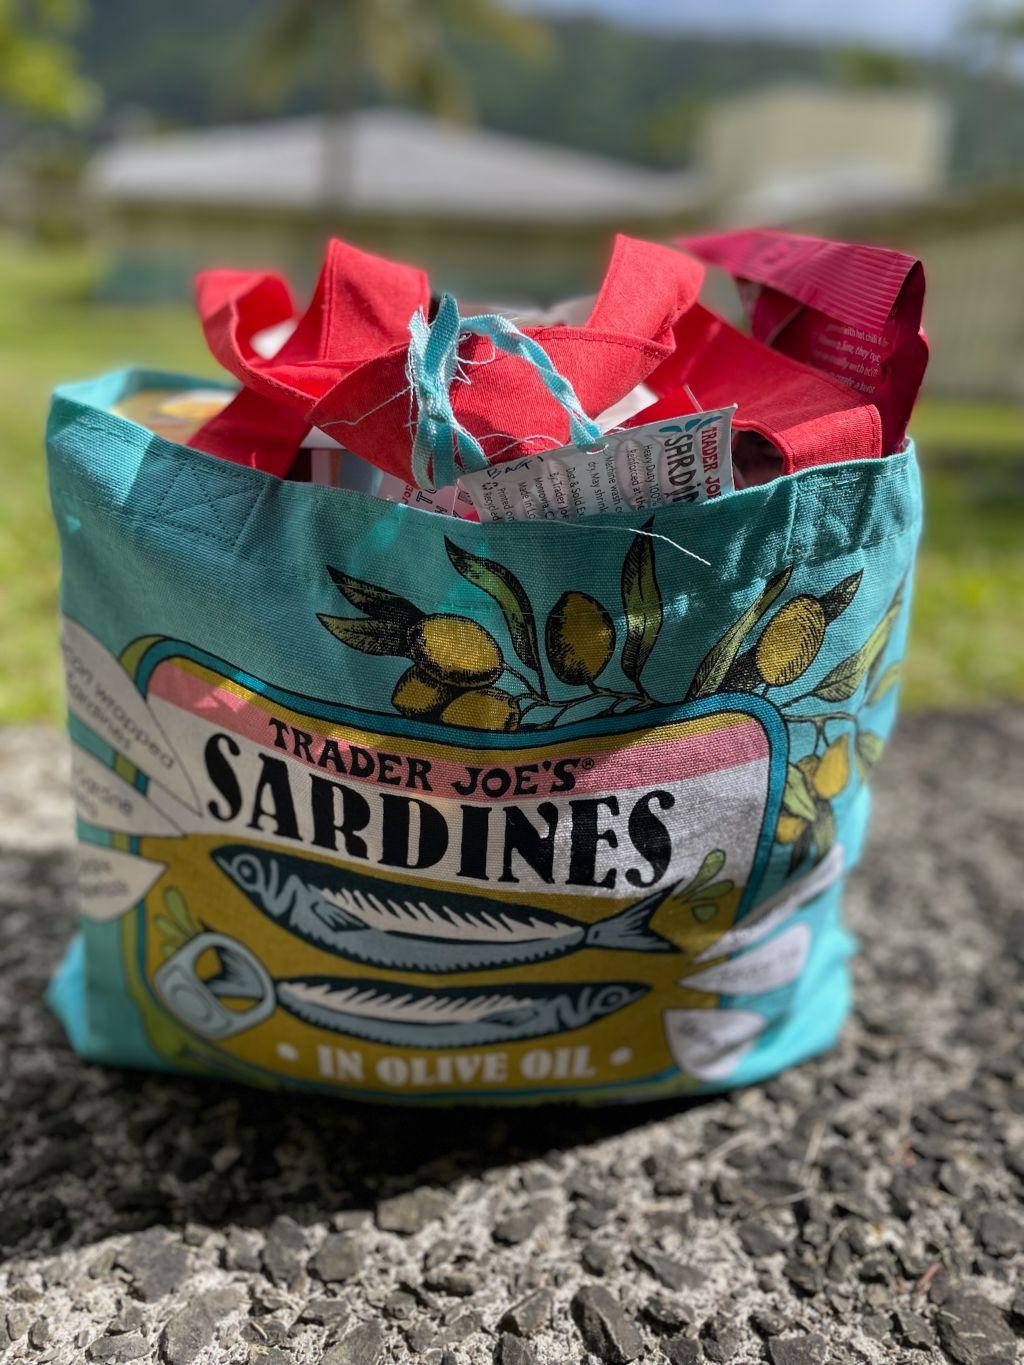 Trade Joe's Sardines Gift Bag Assortment